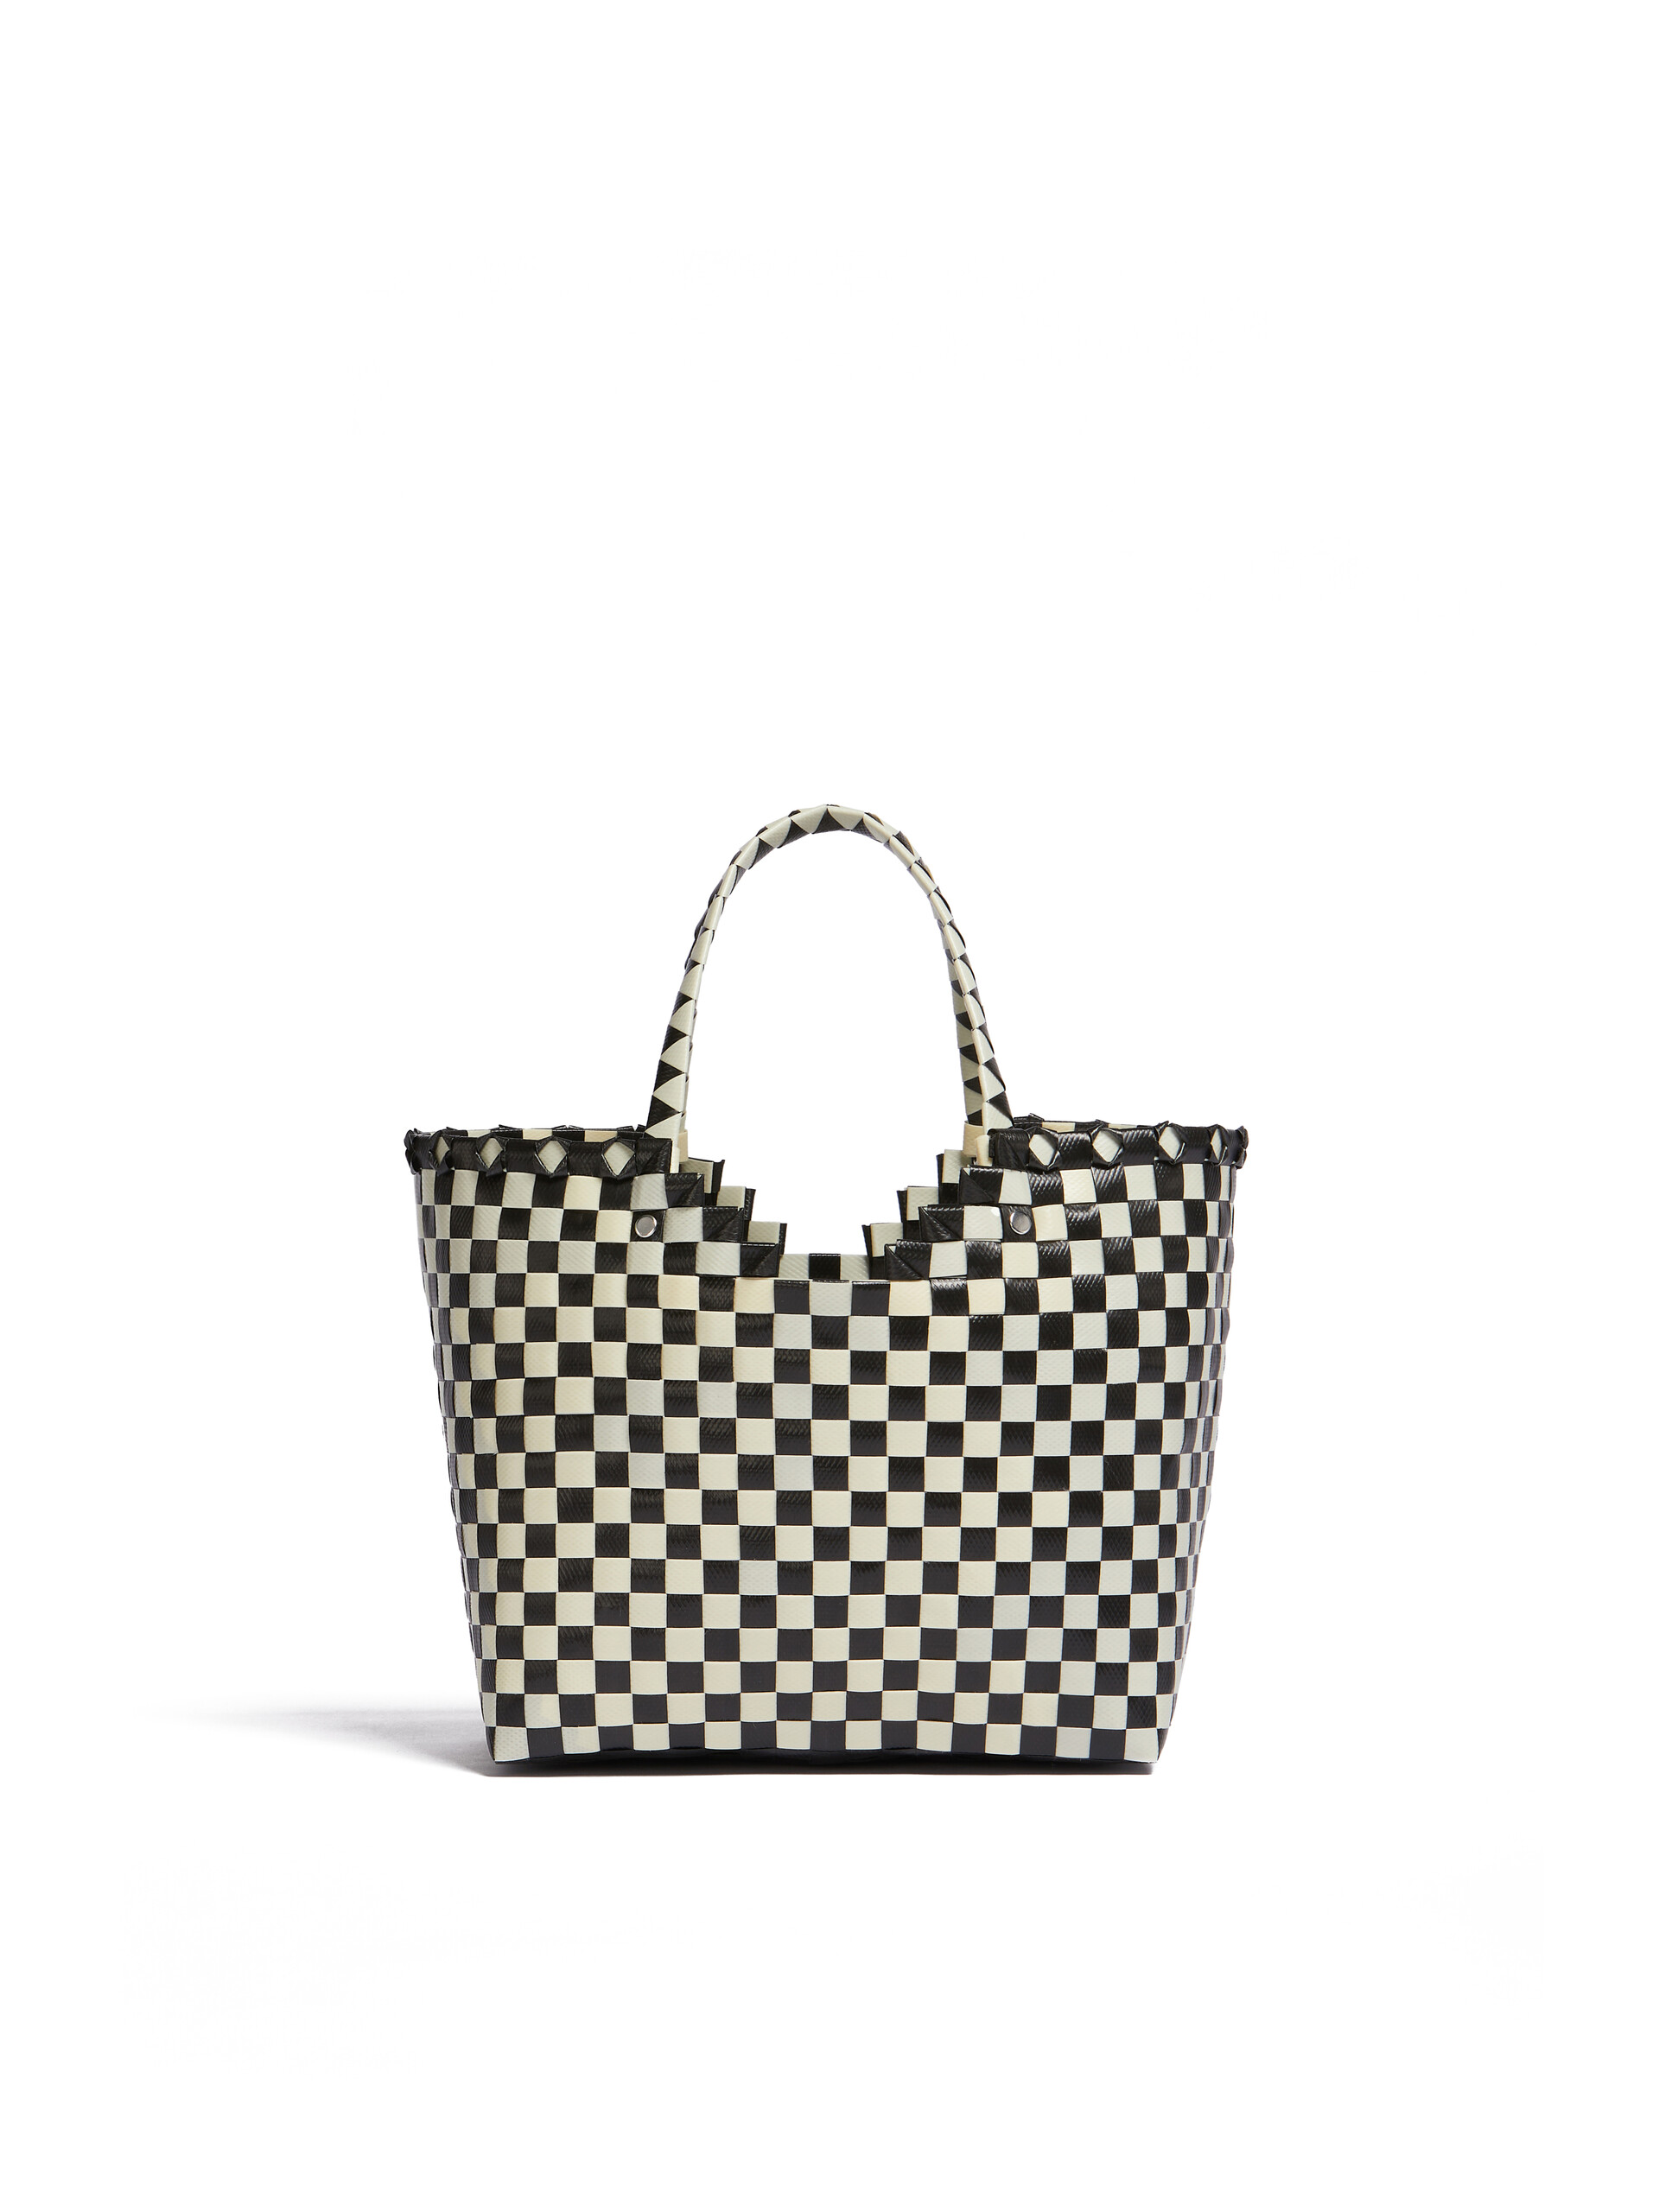 Black and white MARNI MARKET LOVE BASKET bag - Bags - Image 3